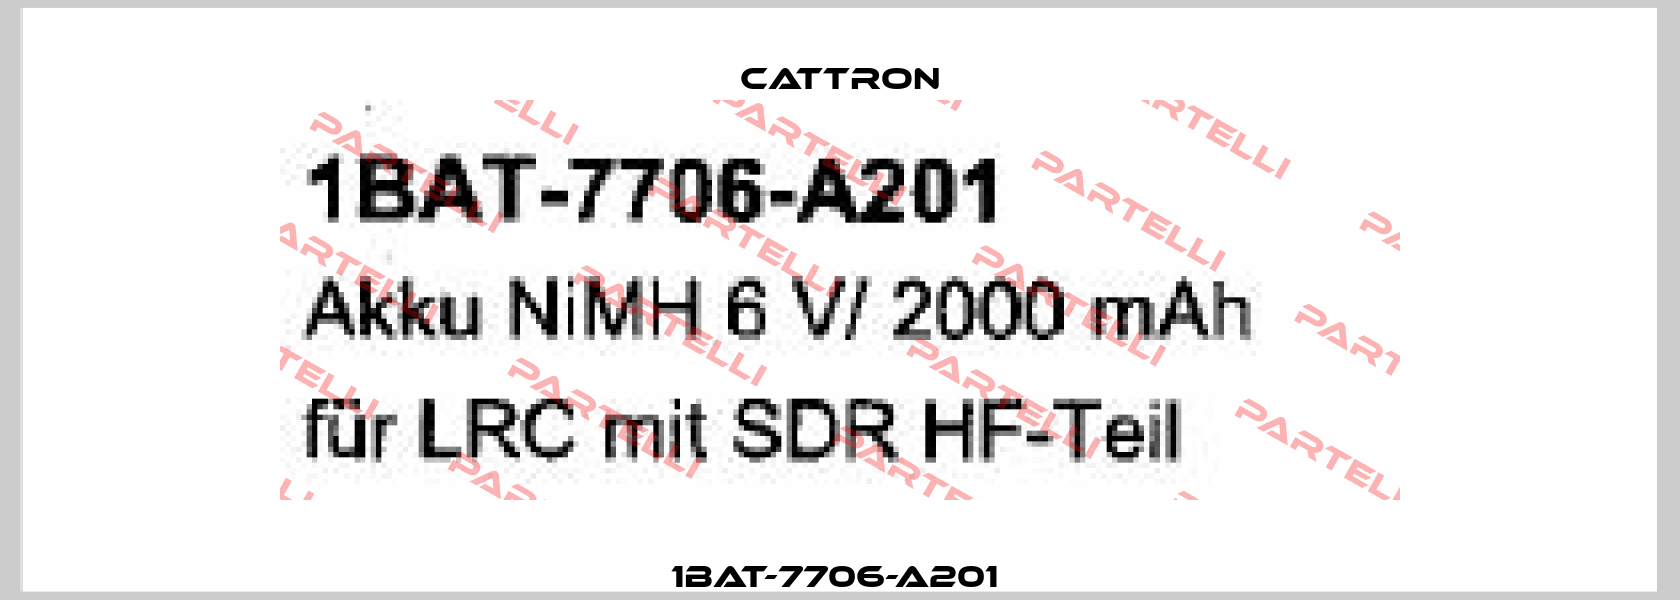 1BAT-7706-A201  Cattron